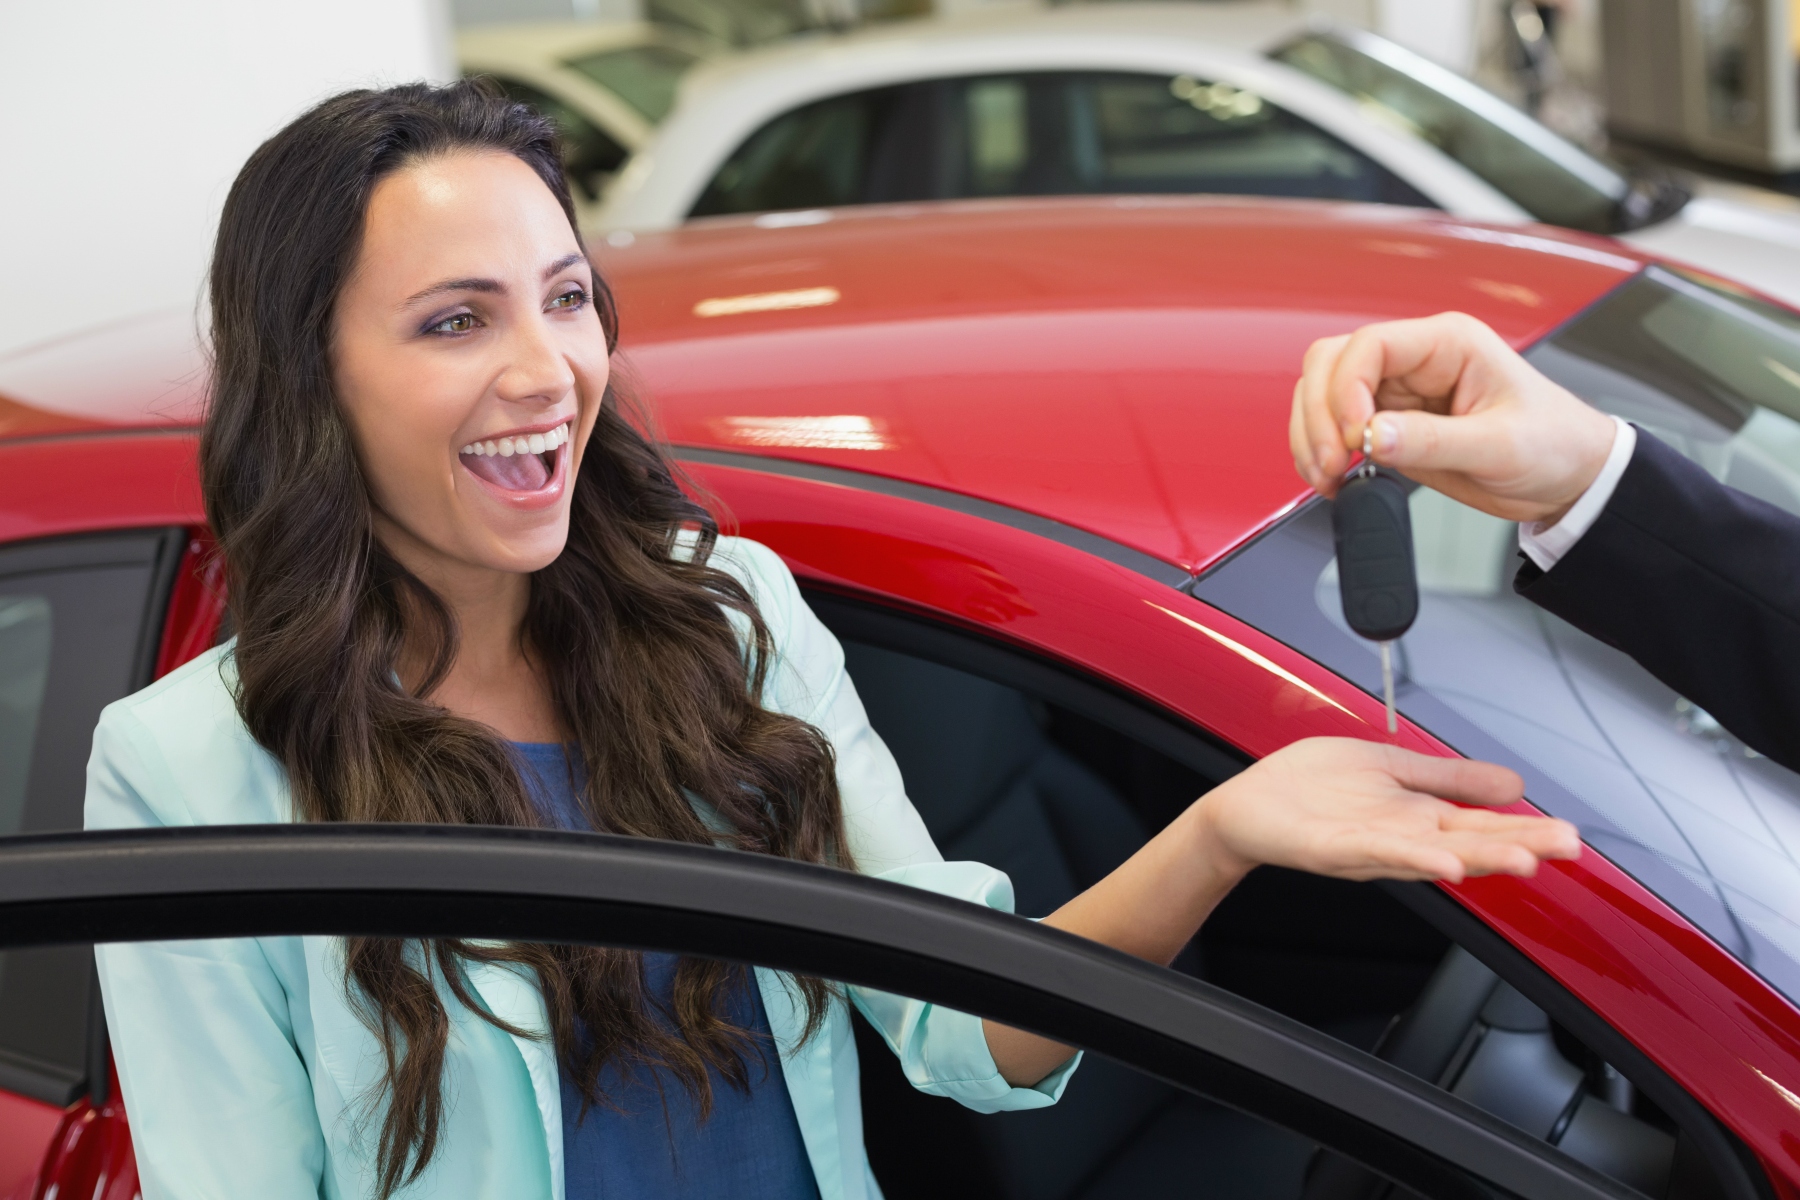 New car buying tips - The Motor Ombudsman